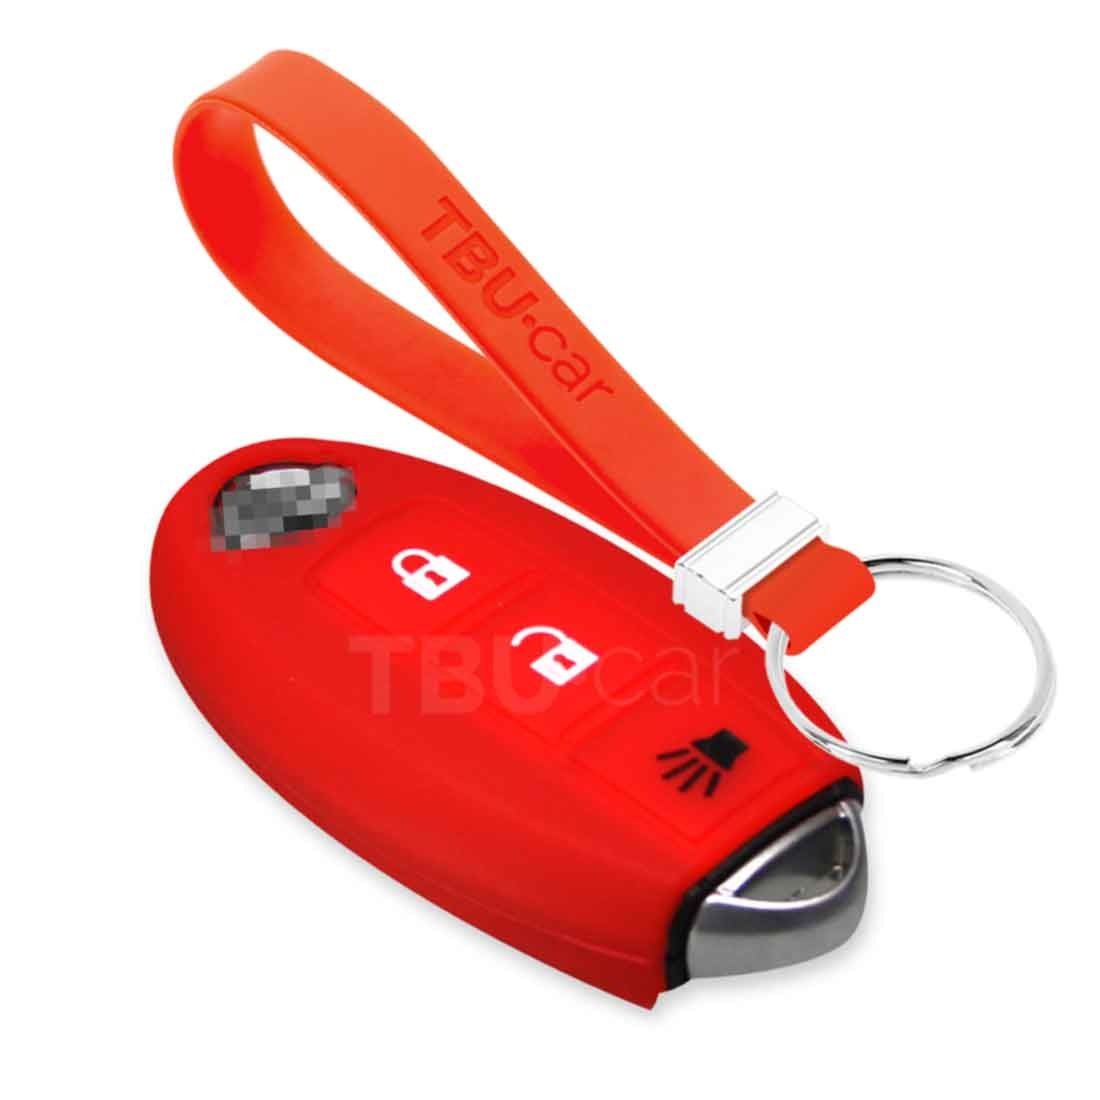 TBU car TBU car Autoschlüssel Hülle kompatibel mit Nissan 3 Tasten (Keyless Entry) - Schutzhülle aus Silikon - Auto Schlüsselhülle Cover in Rot